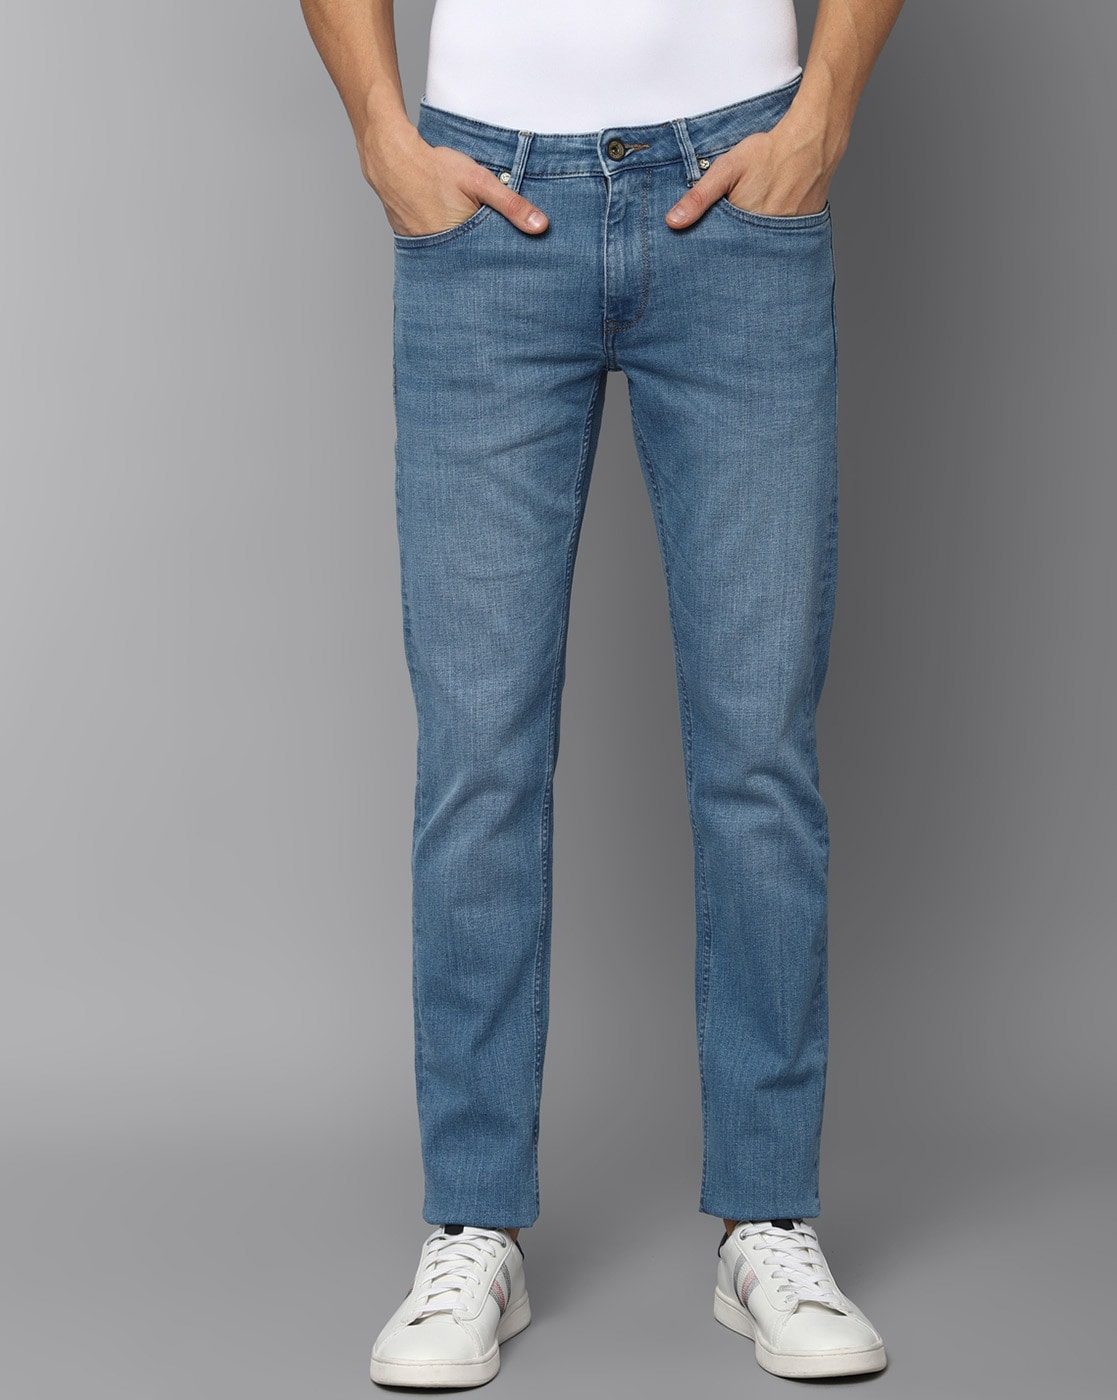 Louis Philippe Jeans Slim Men Grey Jeans - Price History